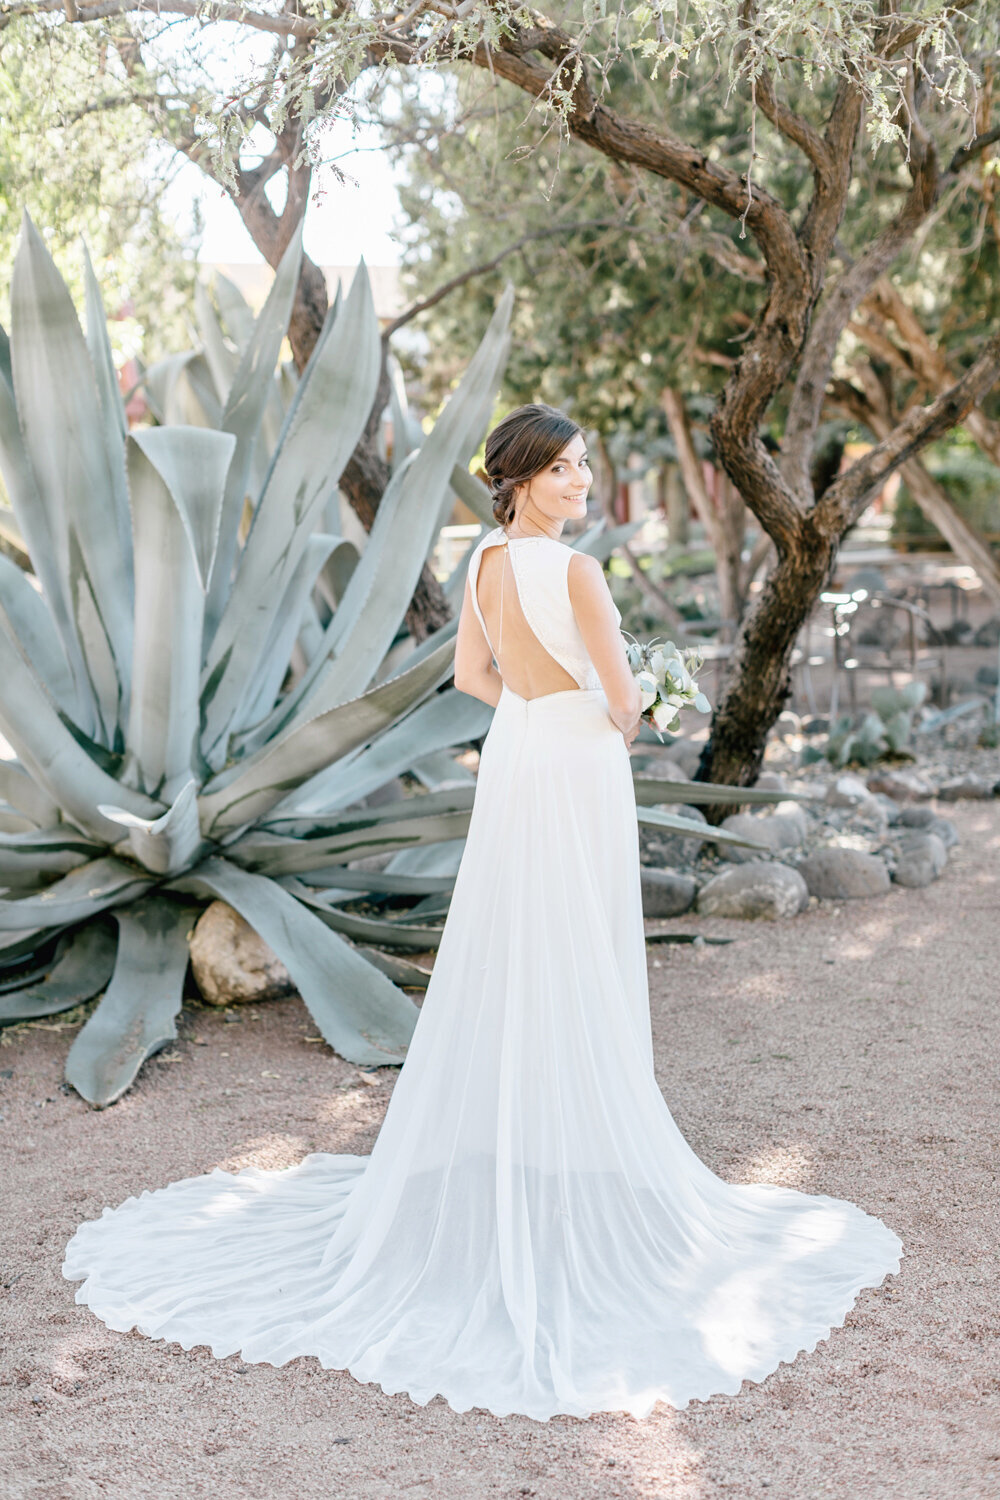 073-Emily-Wren-Photography-Sedona-Arizona-Destination-Wedding